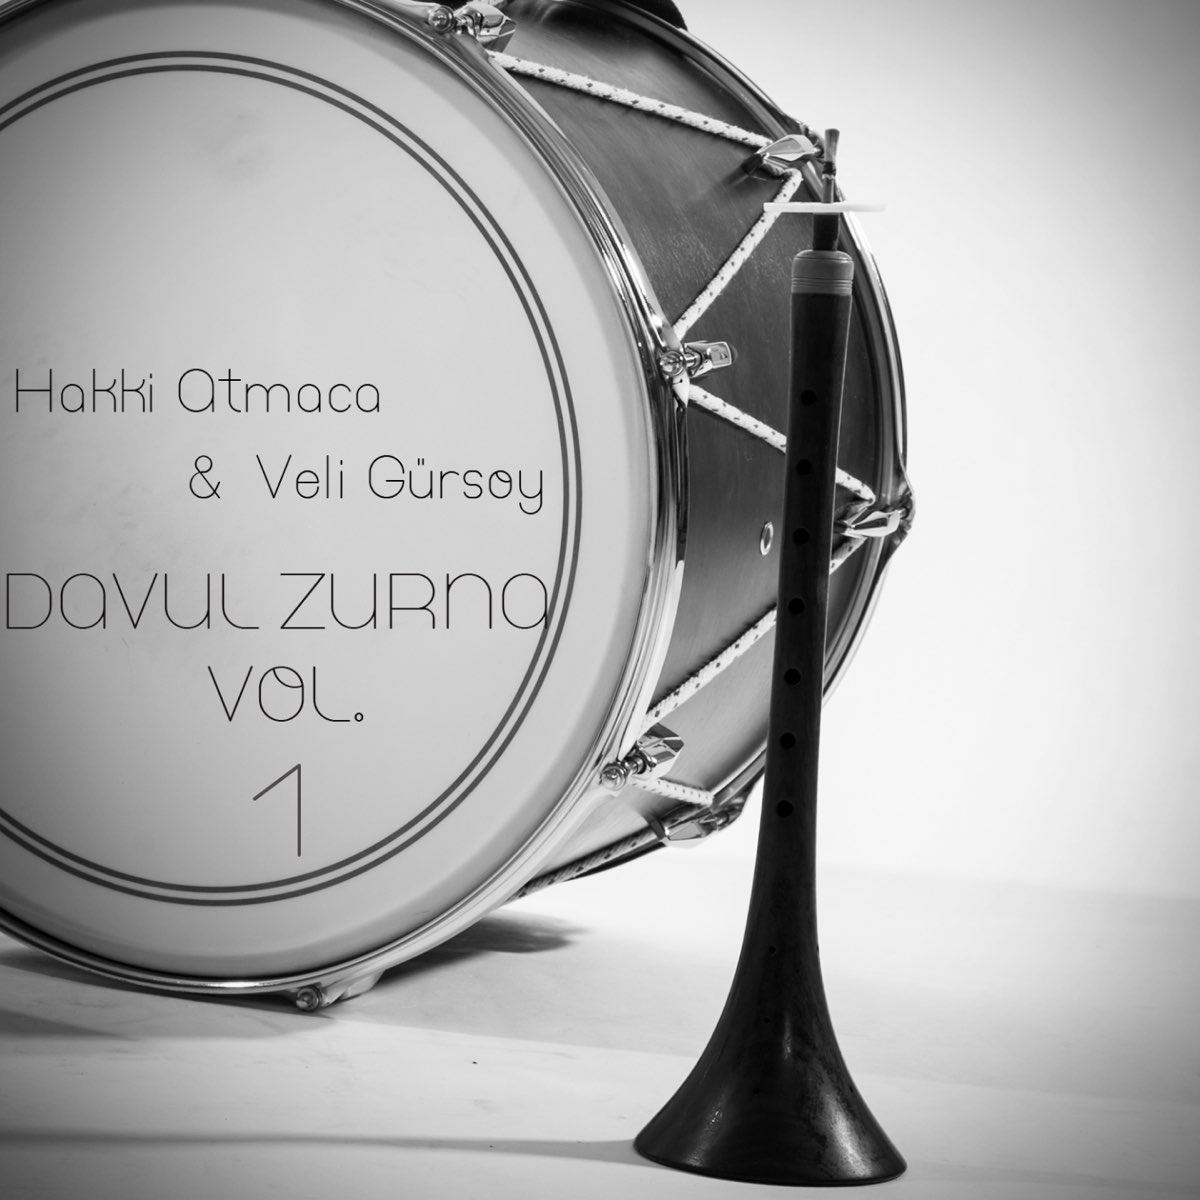 Davul Zurna, Vol. 1 - Album by Hakkı Atmaca & Veli Gürsoy - Apple Music